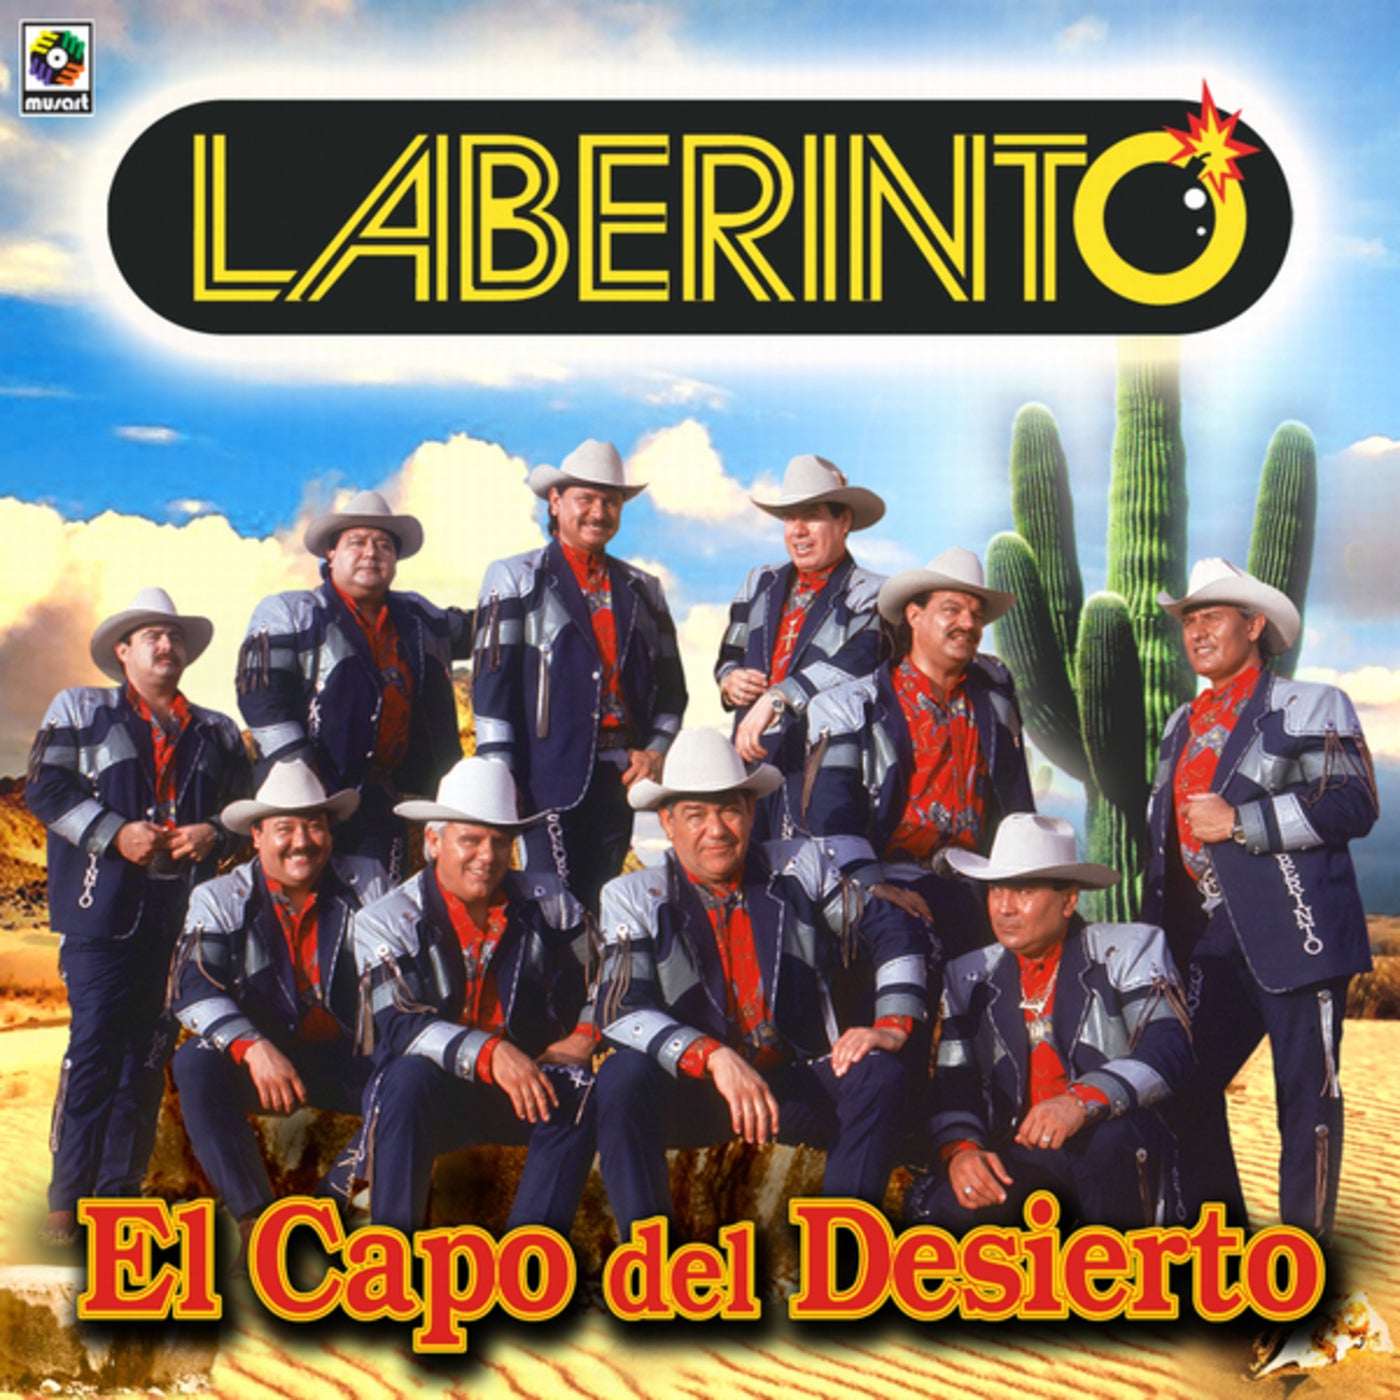 El Capo Del Desierto by Grupo Laberinto on Beatsource